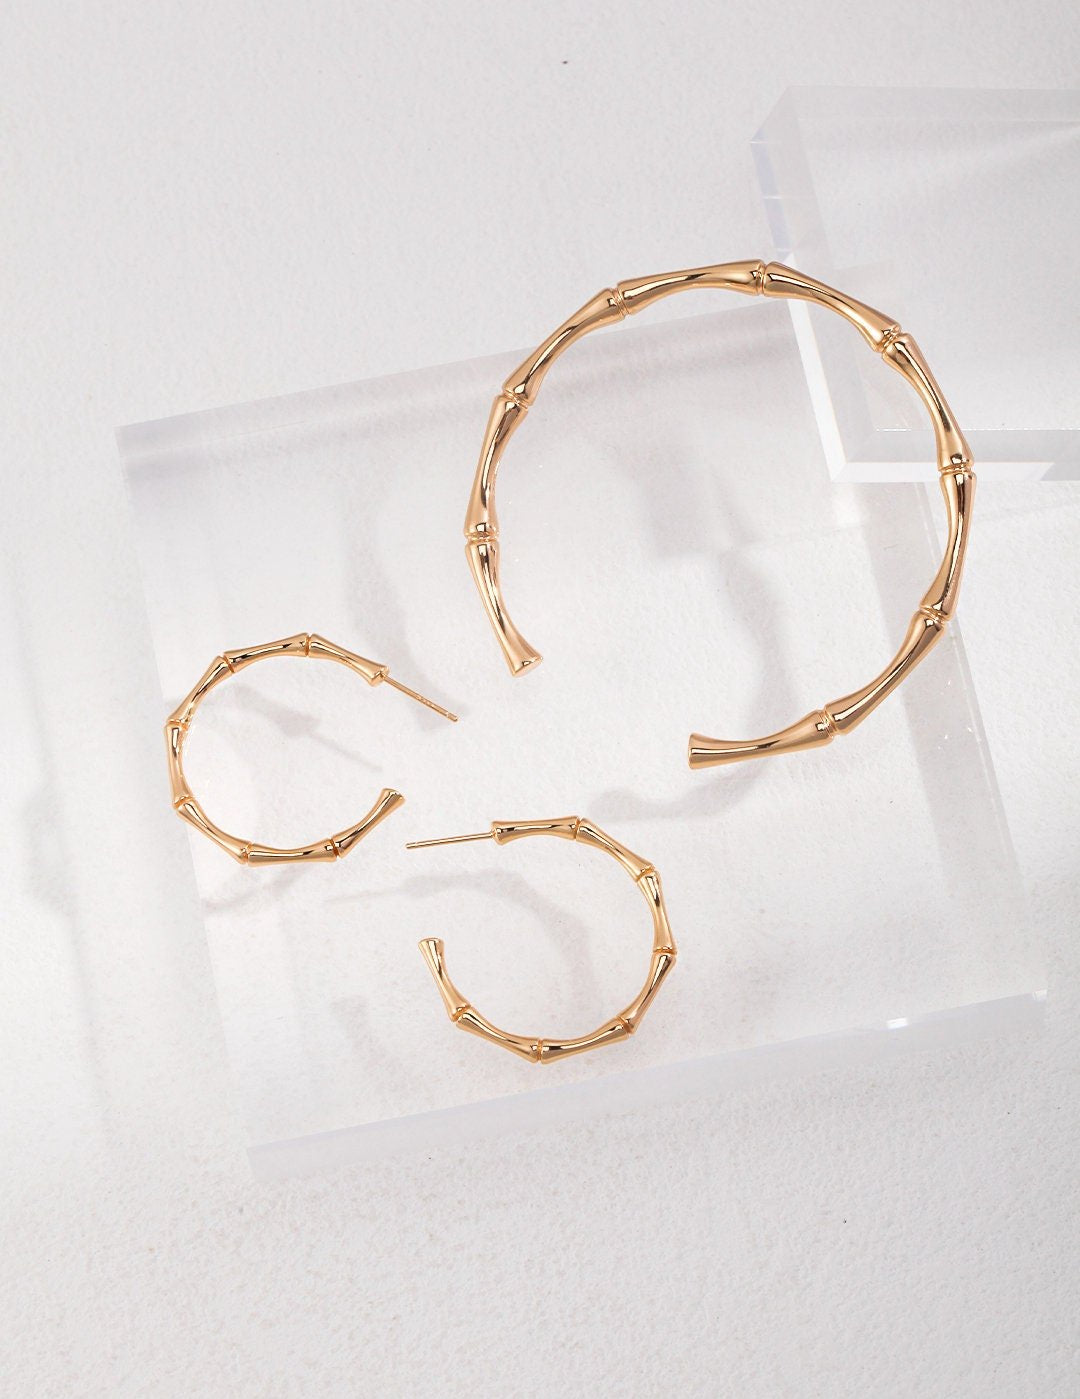 ZEN Minimalist Bamboo shaped cuff bracelet - ZEN&CO Studio